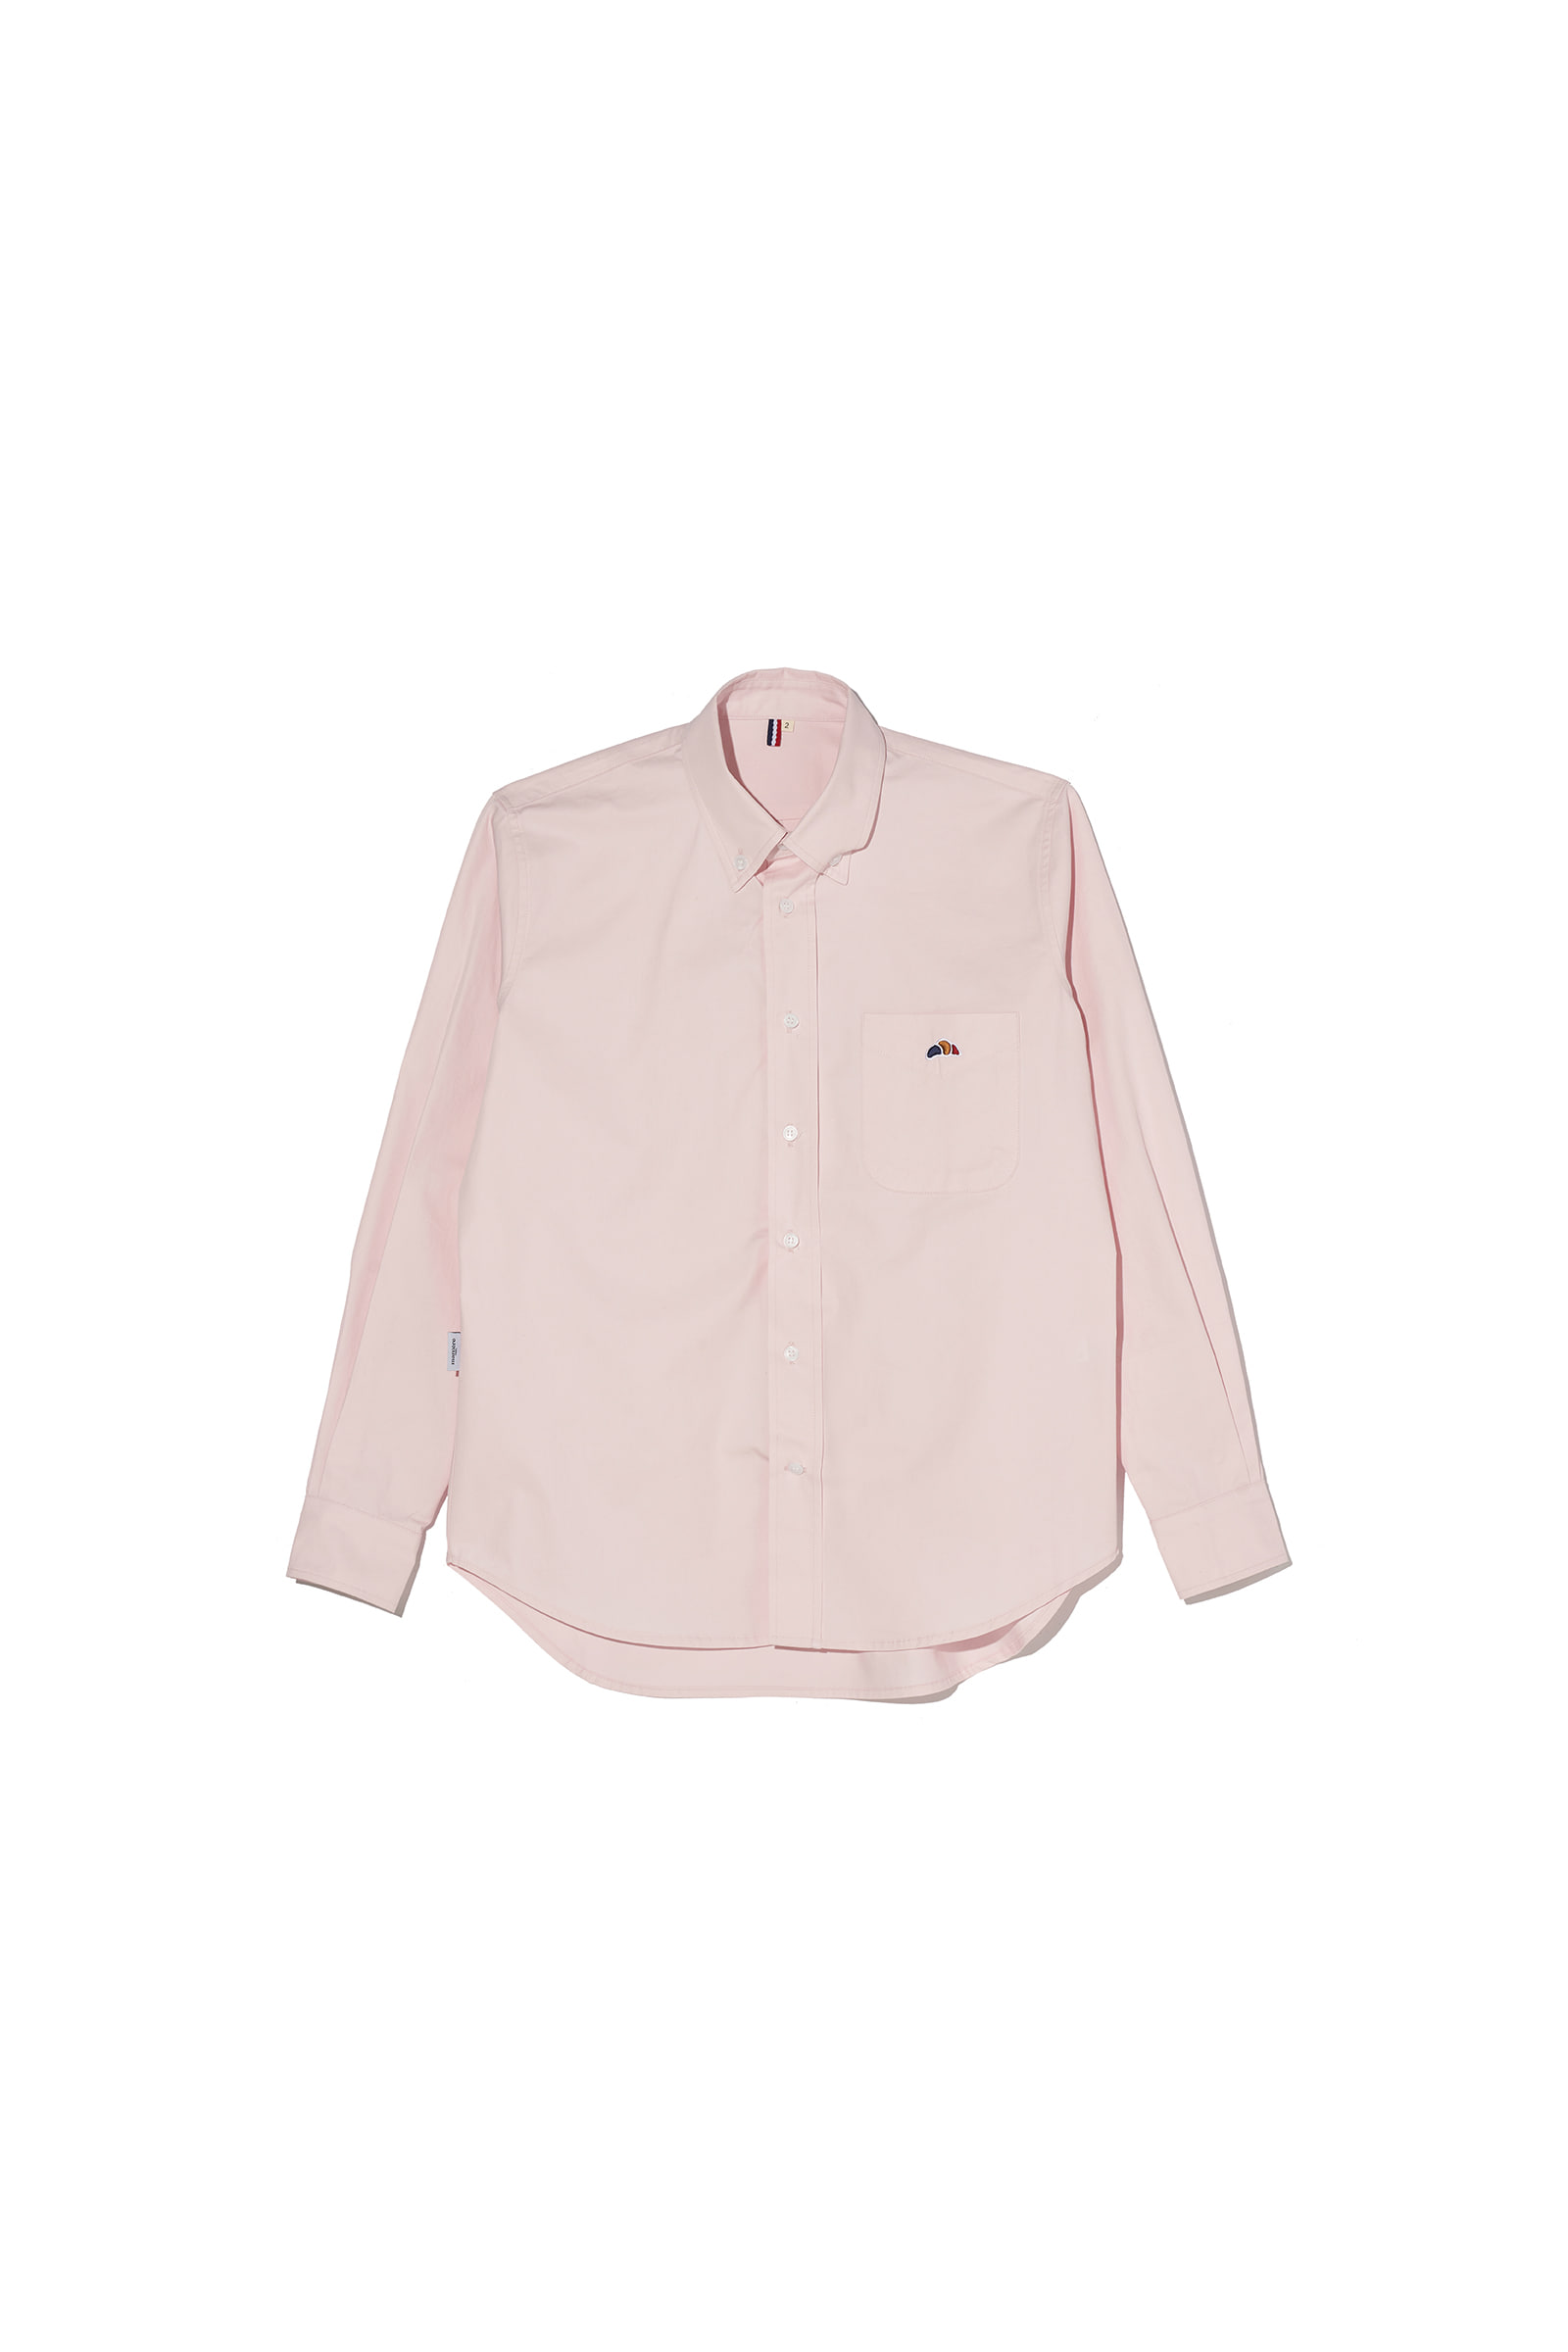 ep.5 Croissant symbol Shirt (Pink)